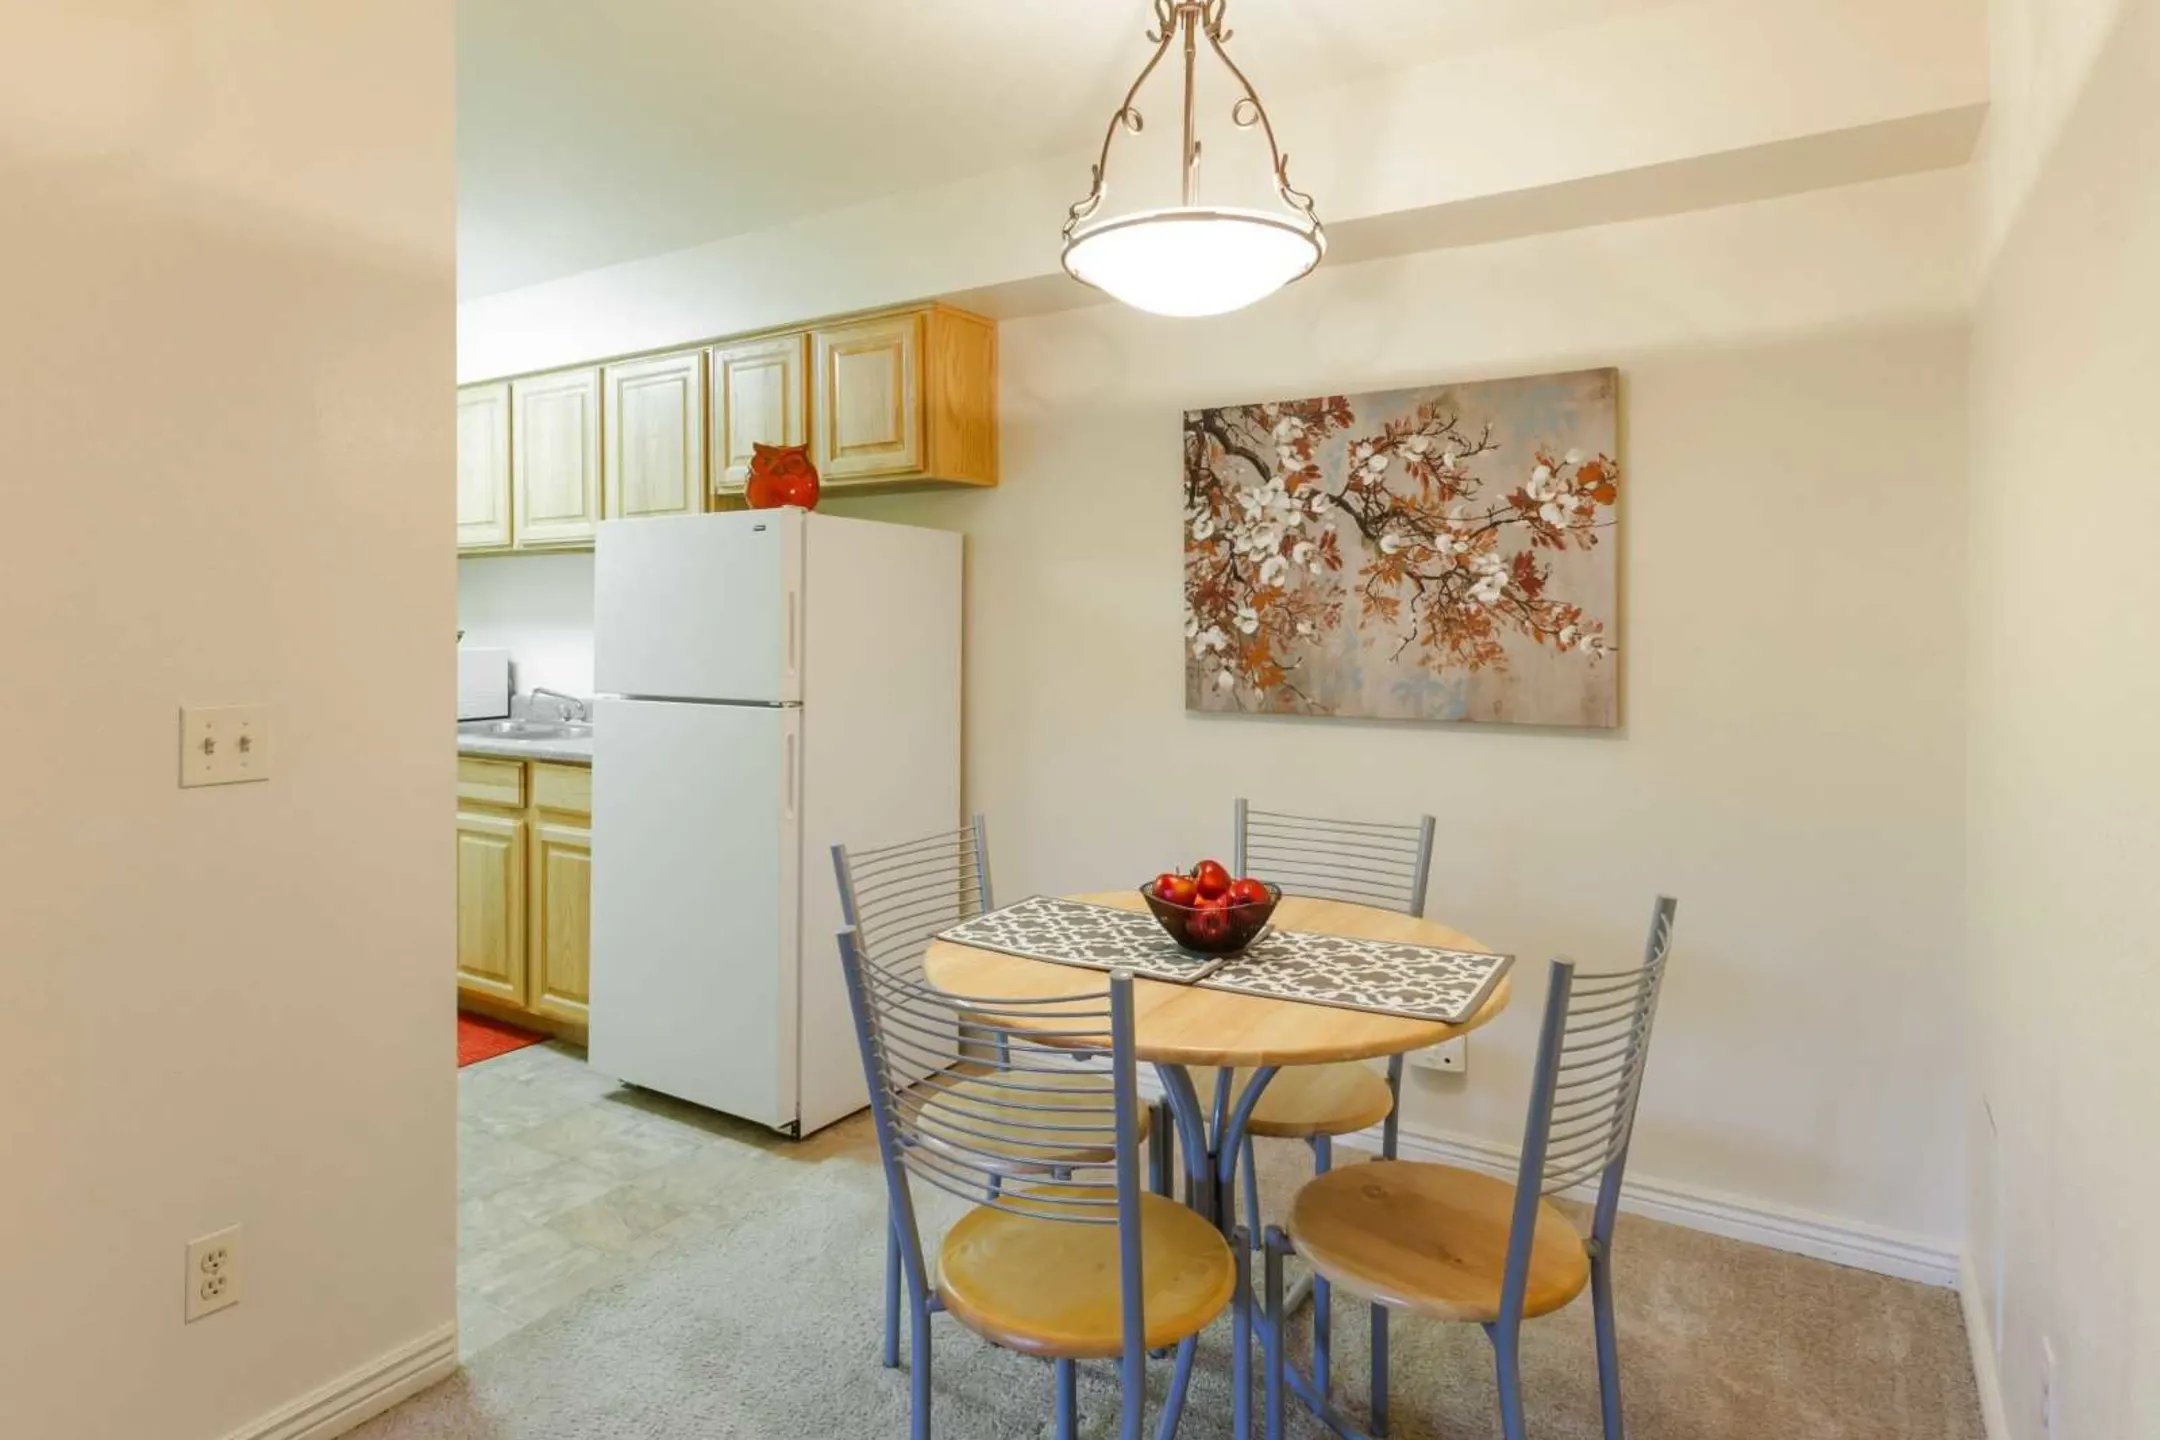 Dining Room - Aspenleaf Apartments - Fort Collins, CO